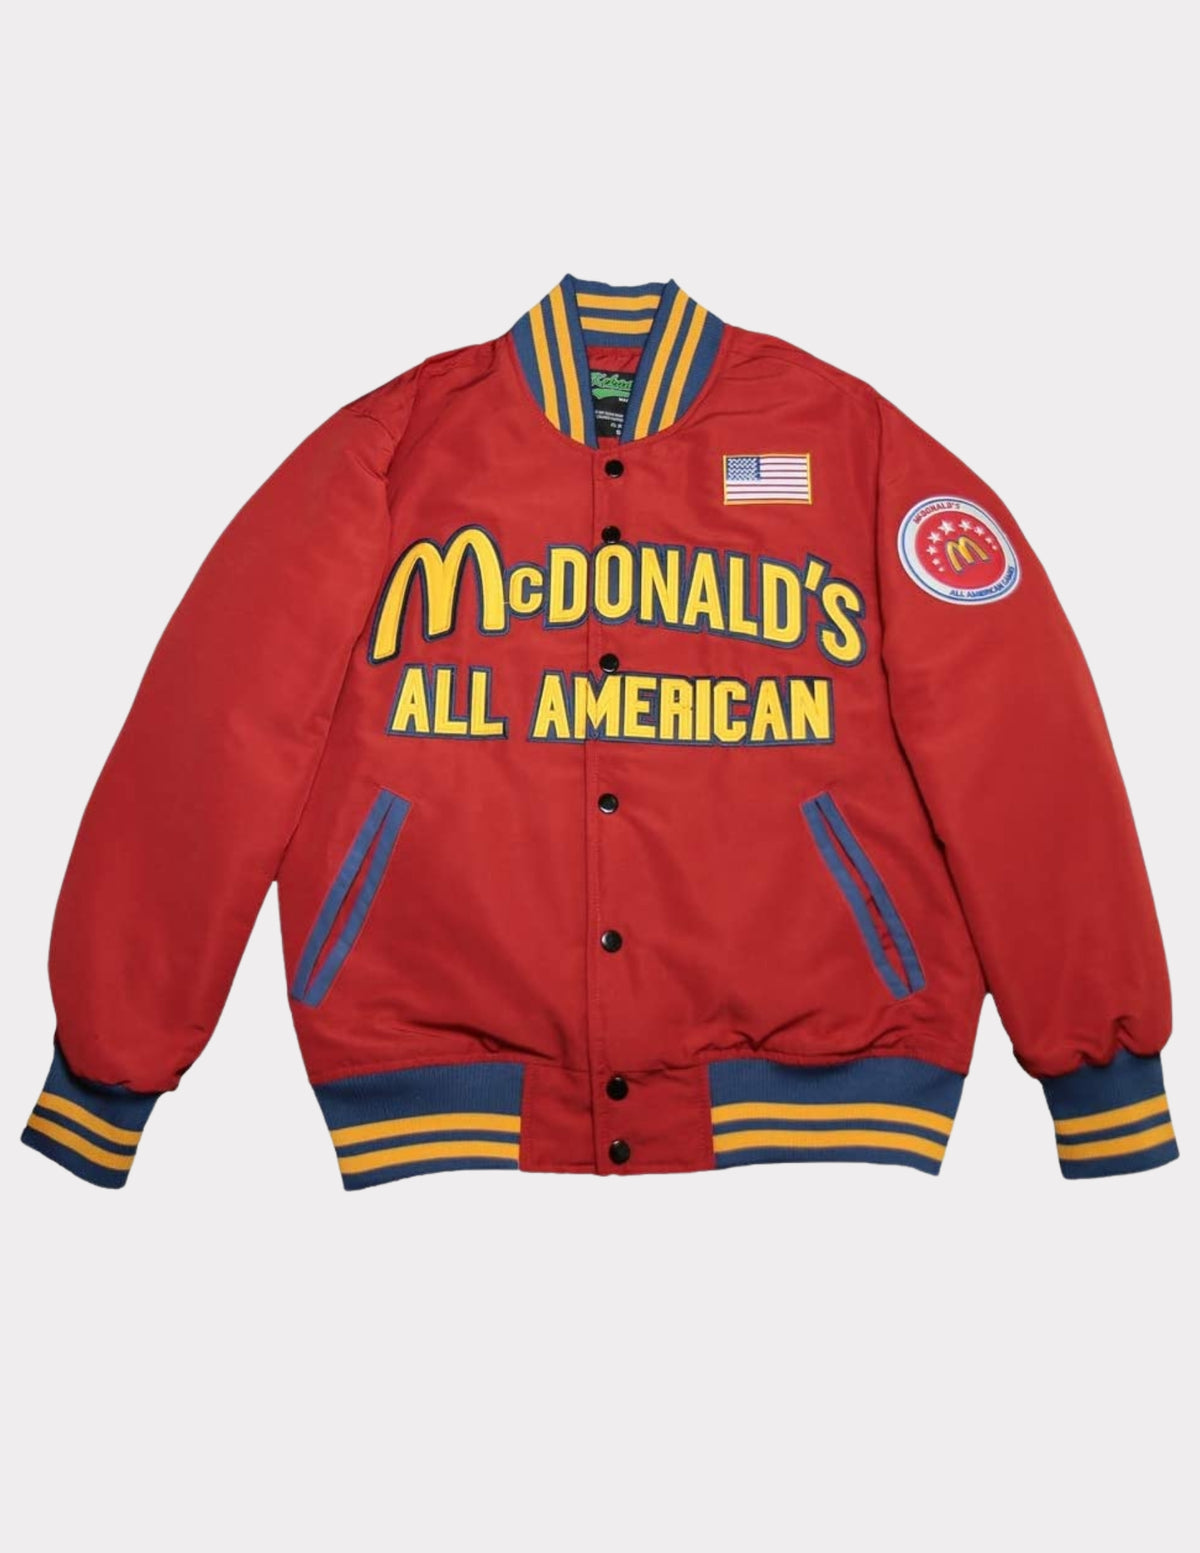 McDonald’s All American Kobe Bryant #33 Red Varsity Jacket